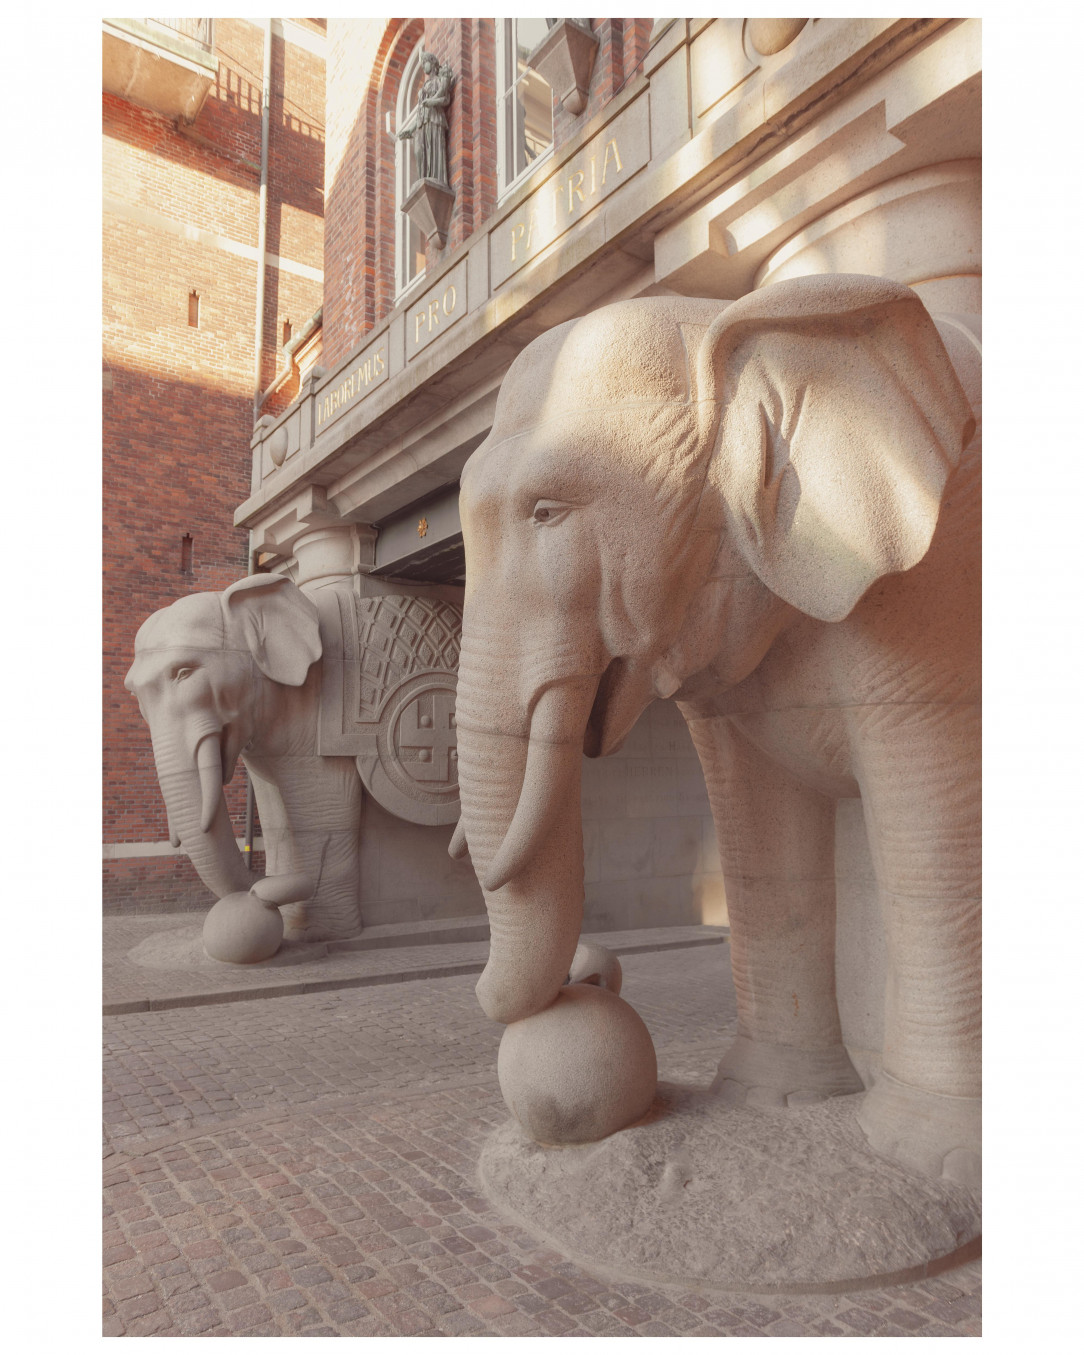 Some elephants in Copenhagen